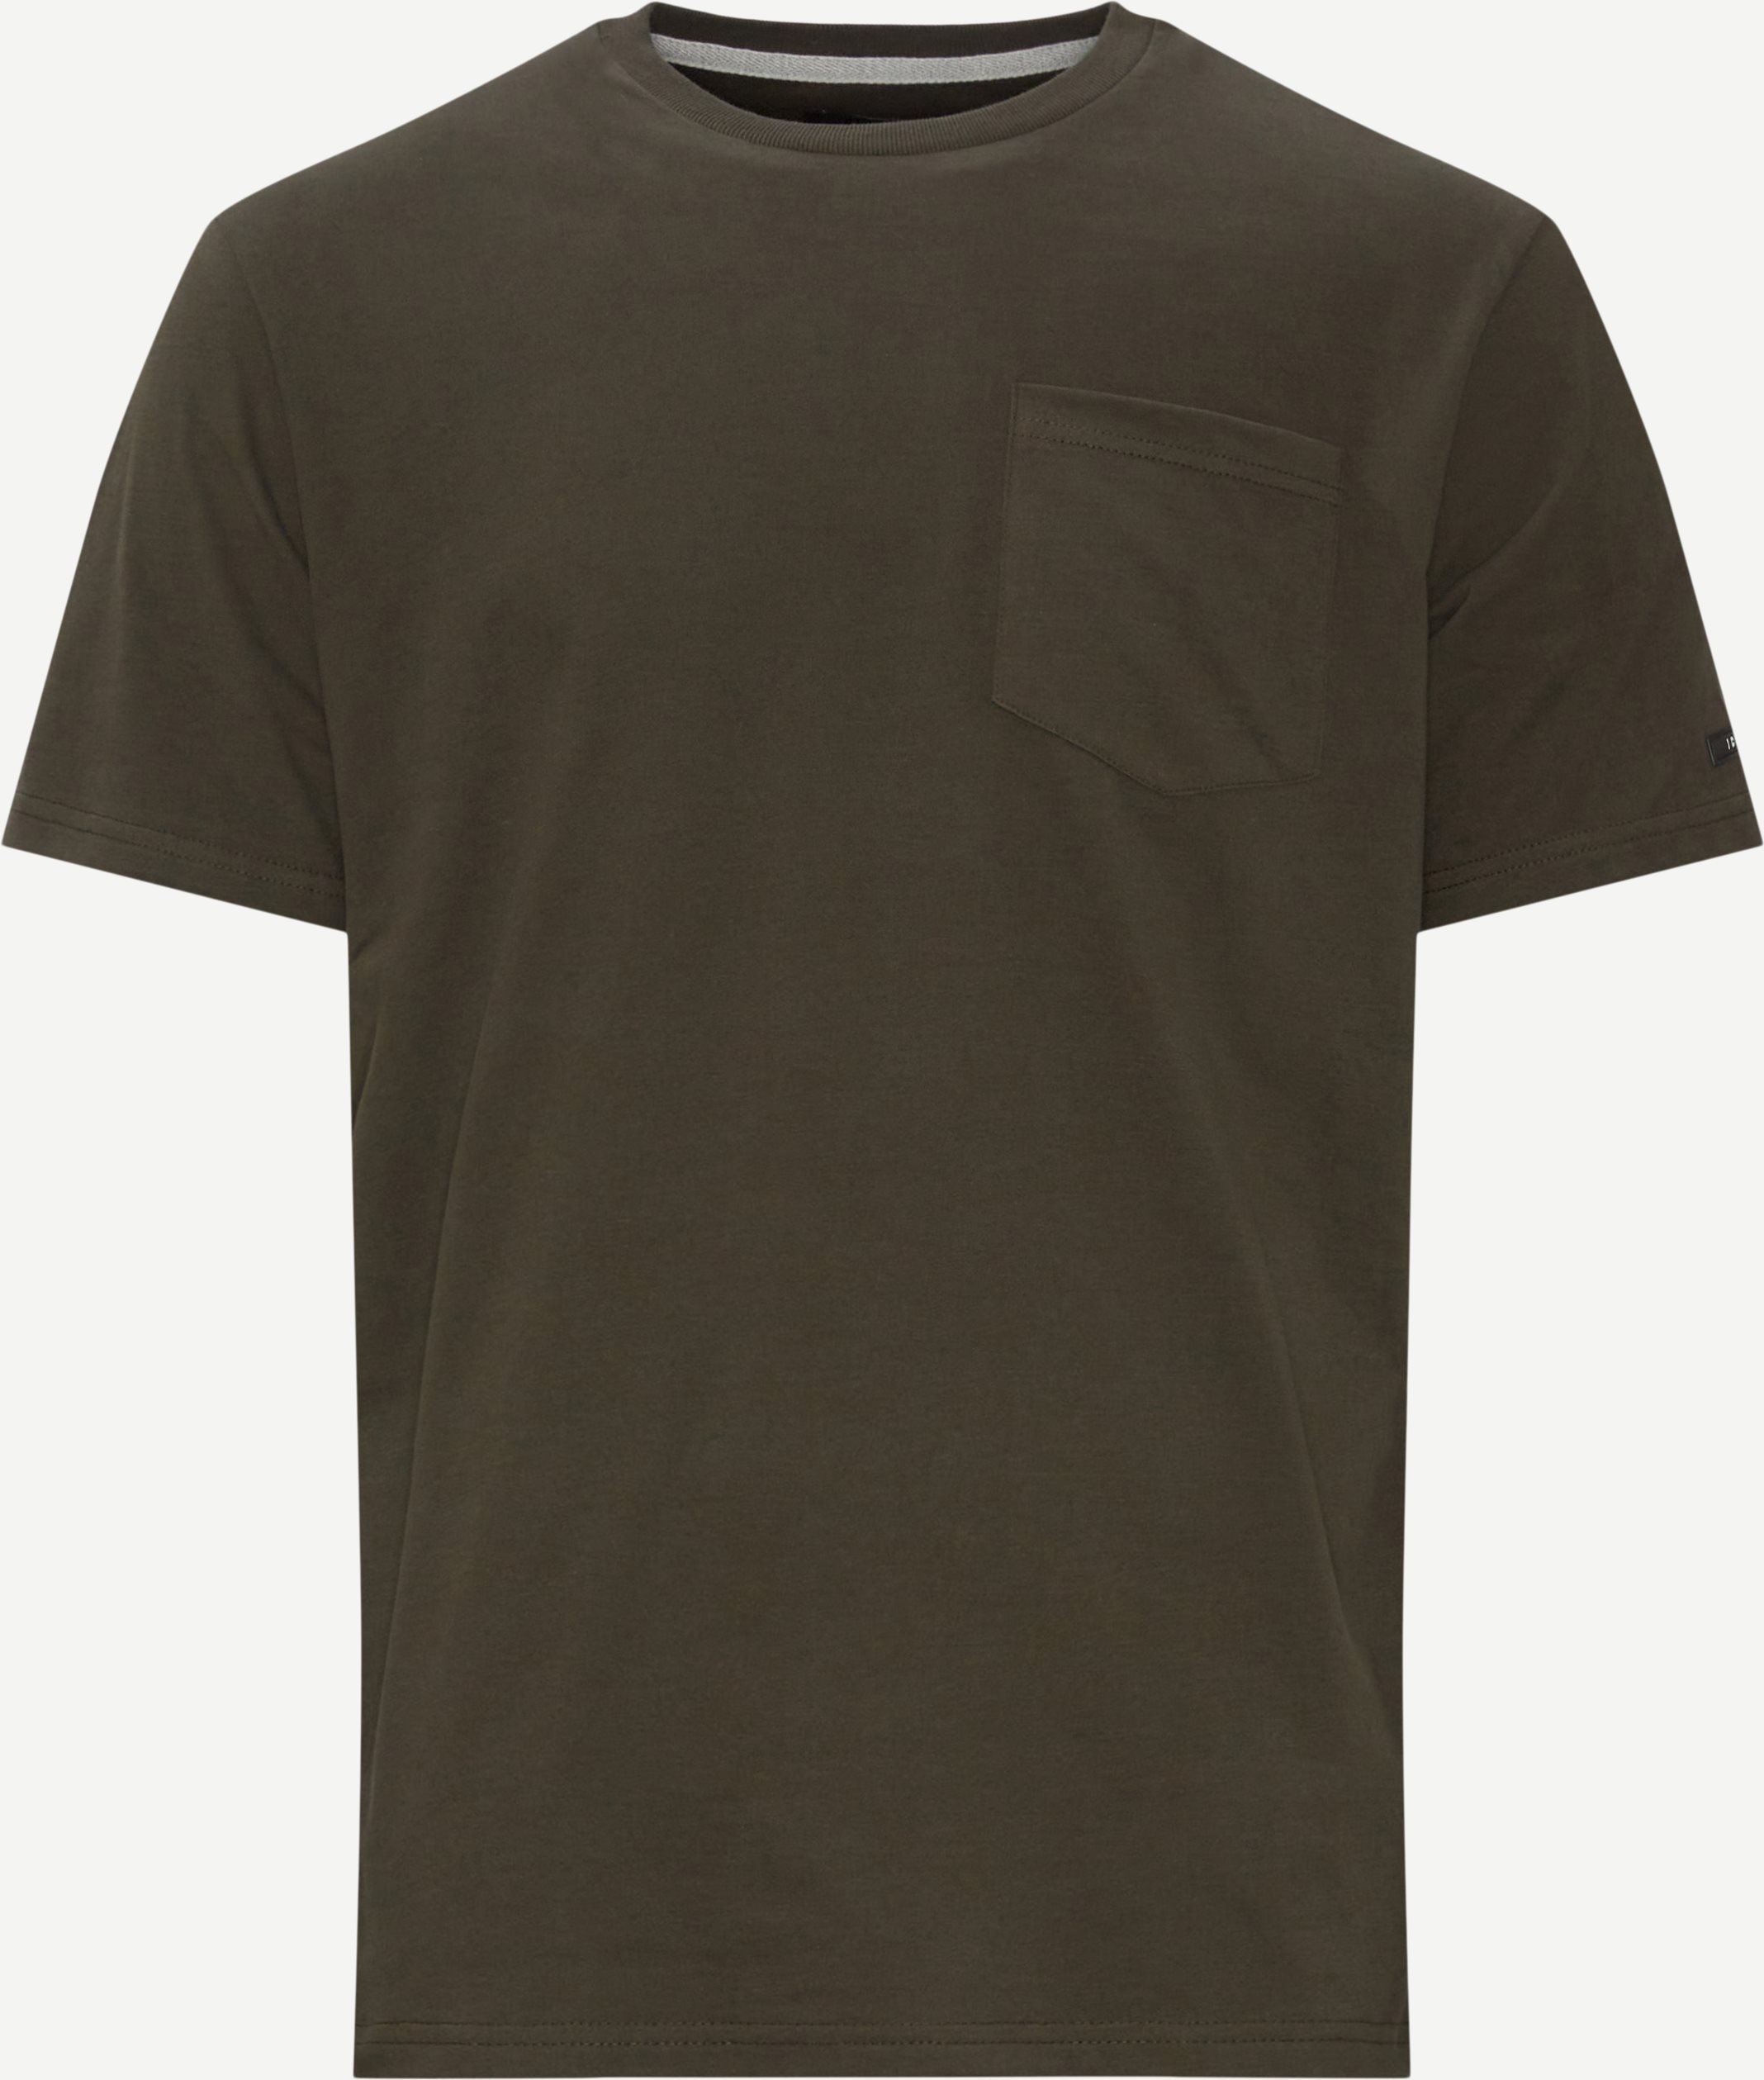 Zeus T-shirt - T-shirts - Regular fit - Army